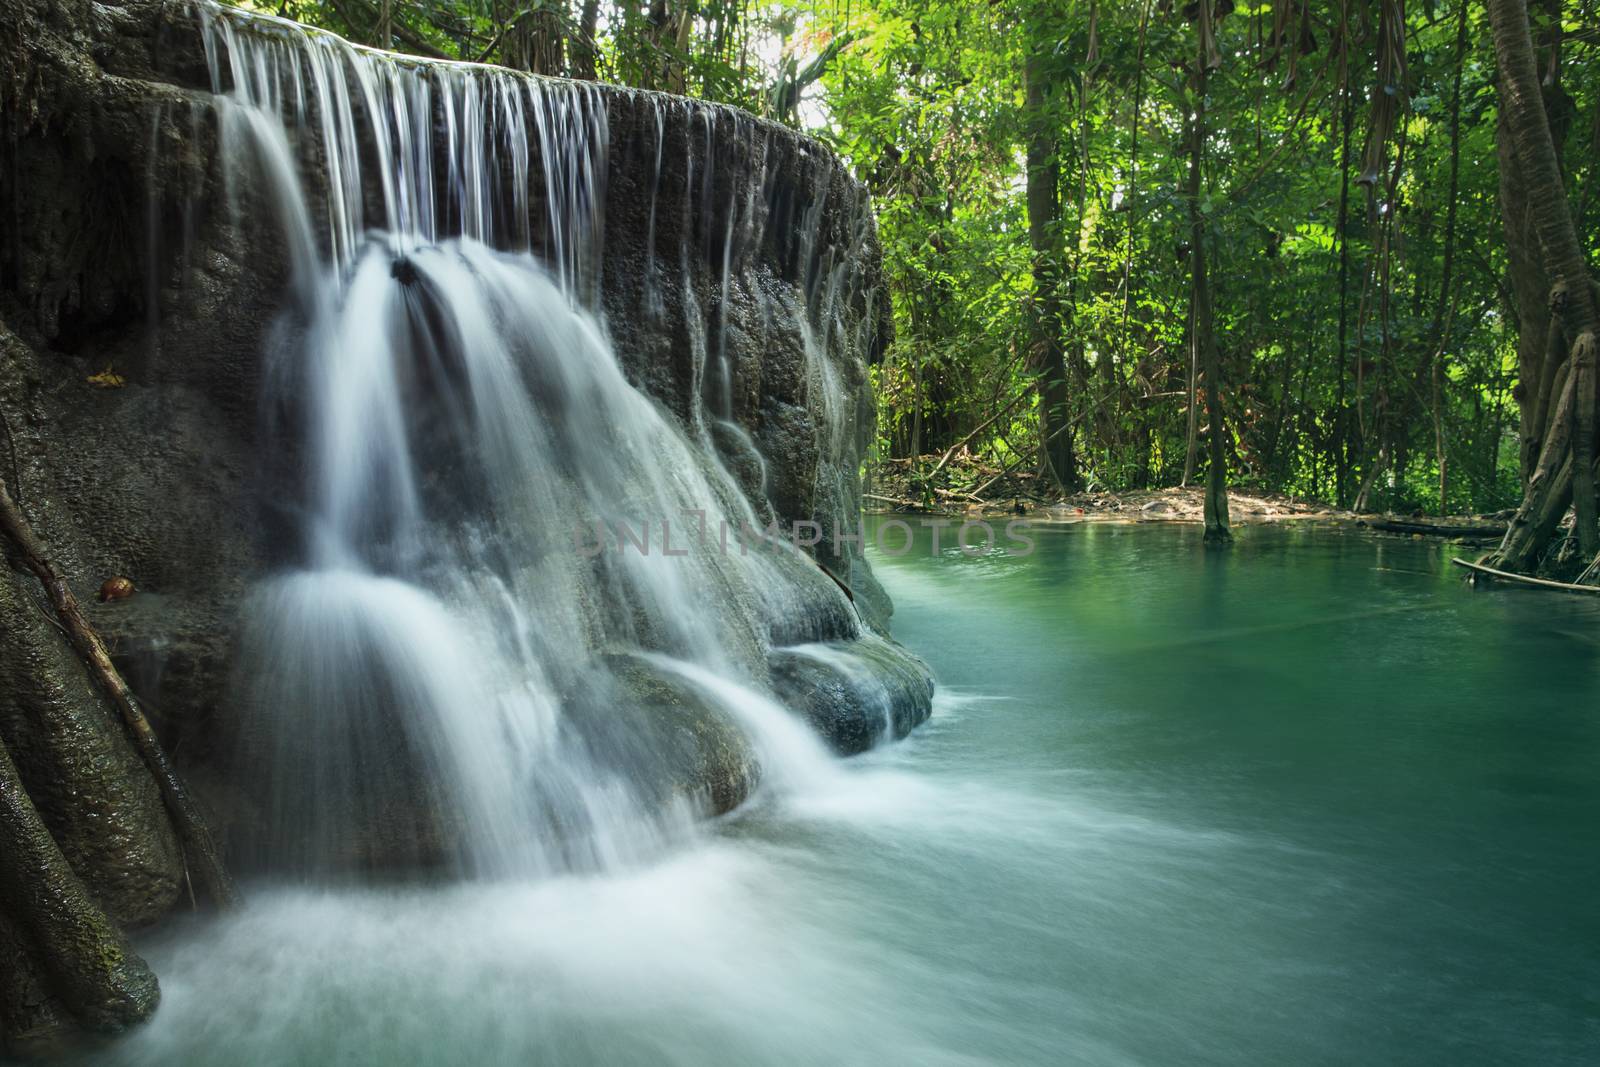 lime stone water fall in arawan water fall national park kanchan by khunaspix